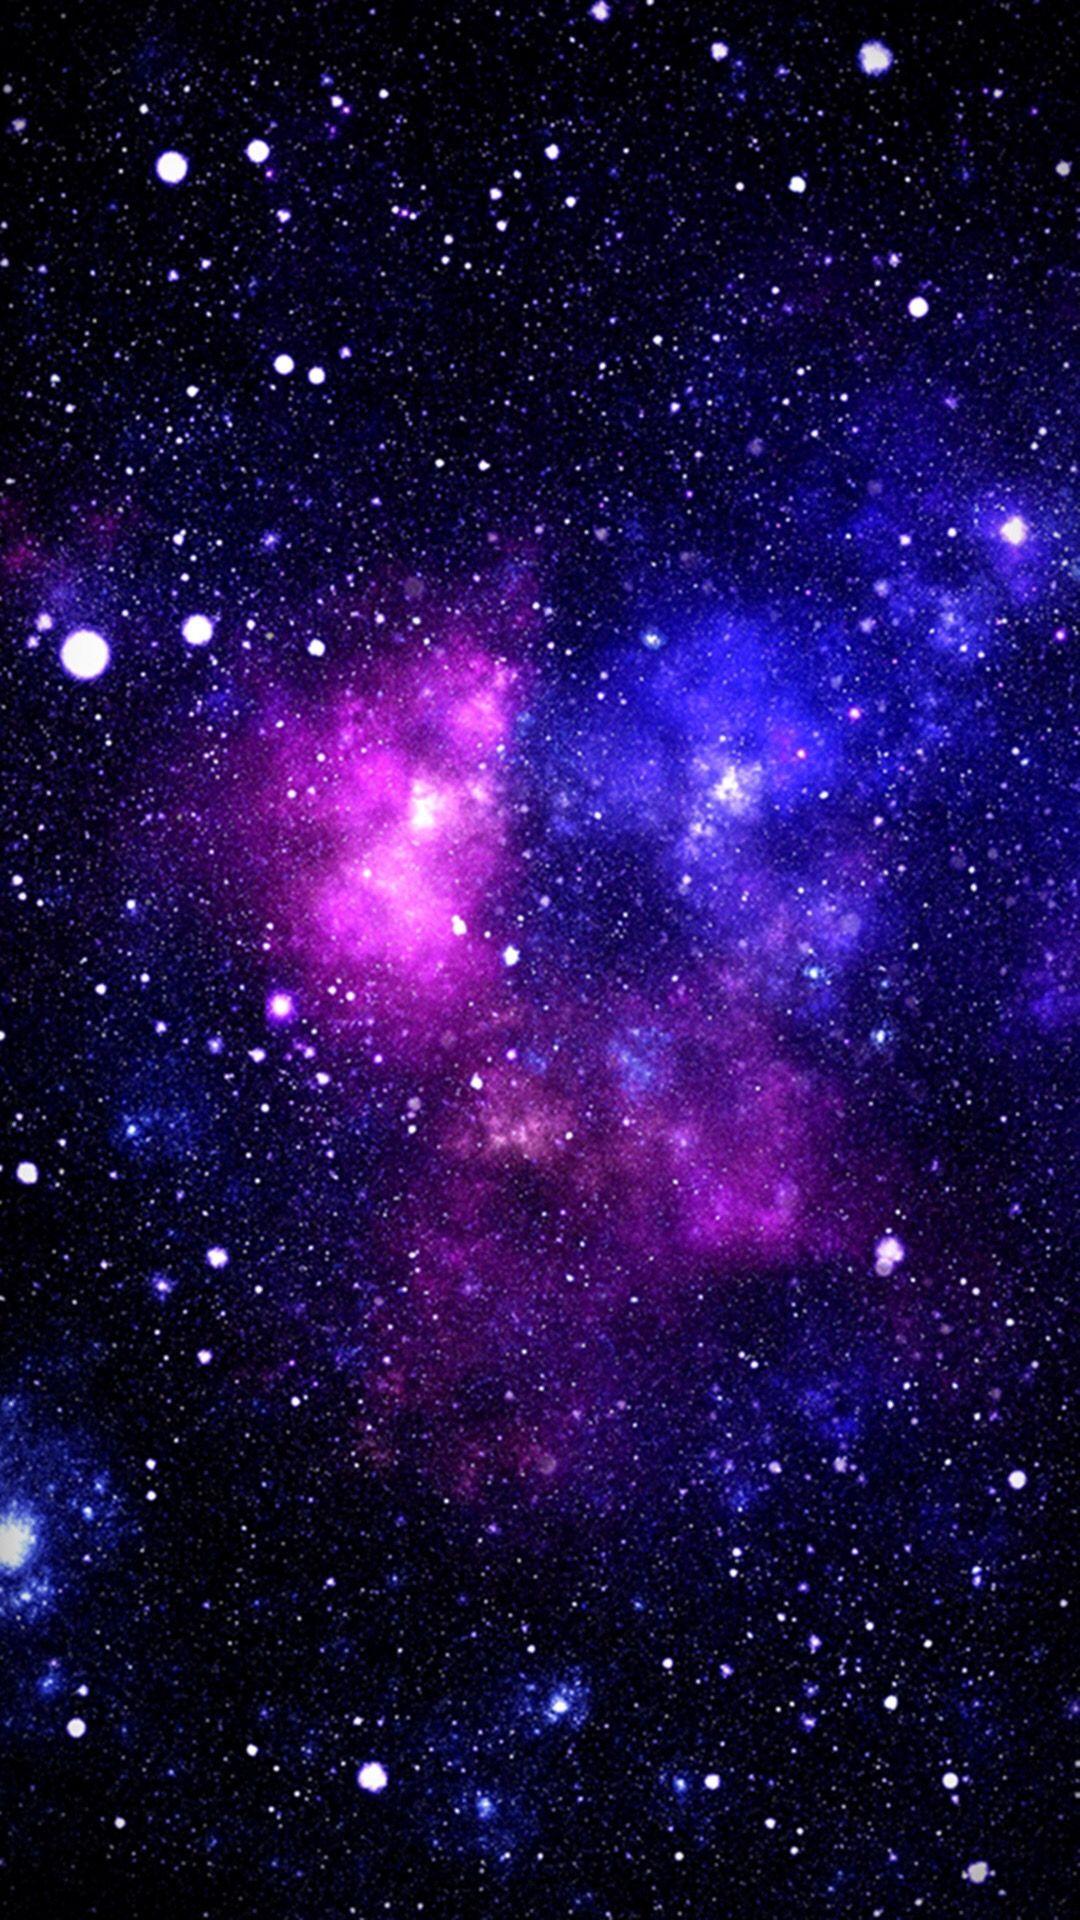 Purple Pink Galaxy Space Stars Nebula HD Space Wallpapers  HD Wallpapers   ID 69207